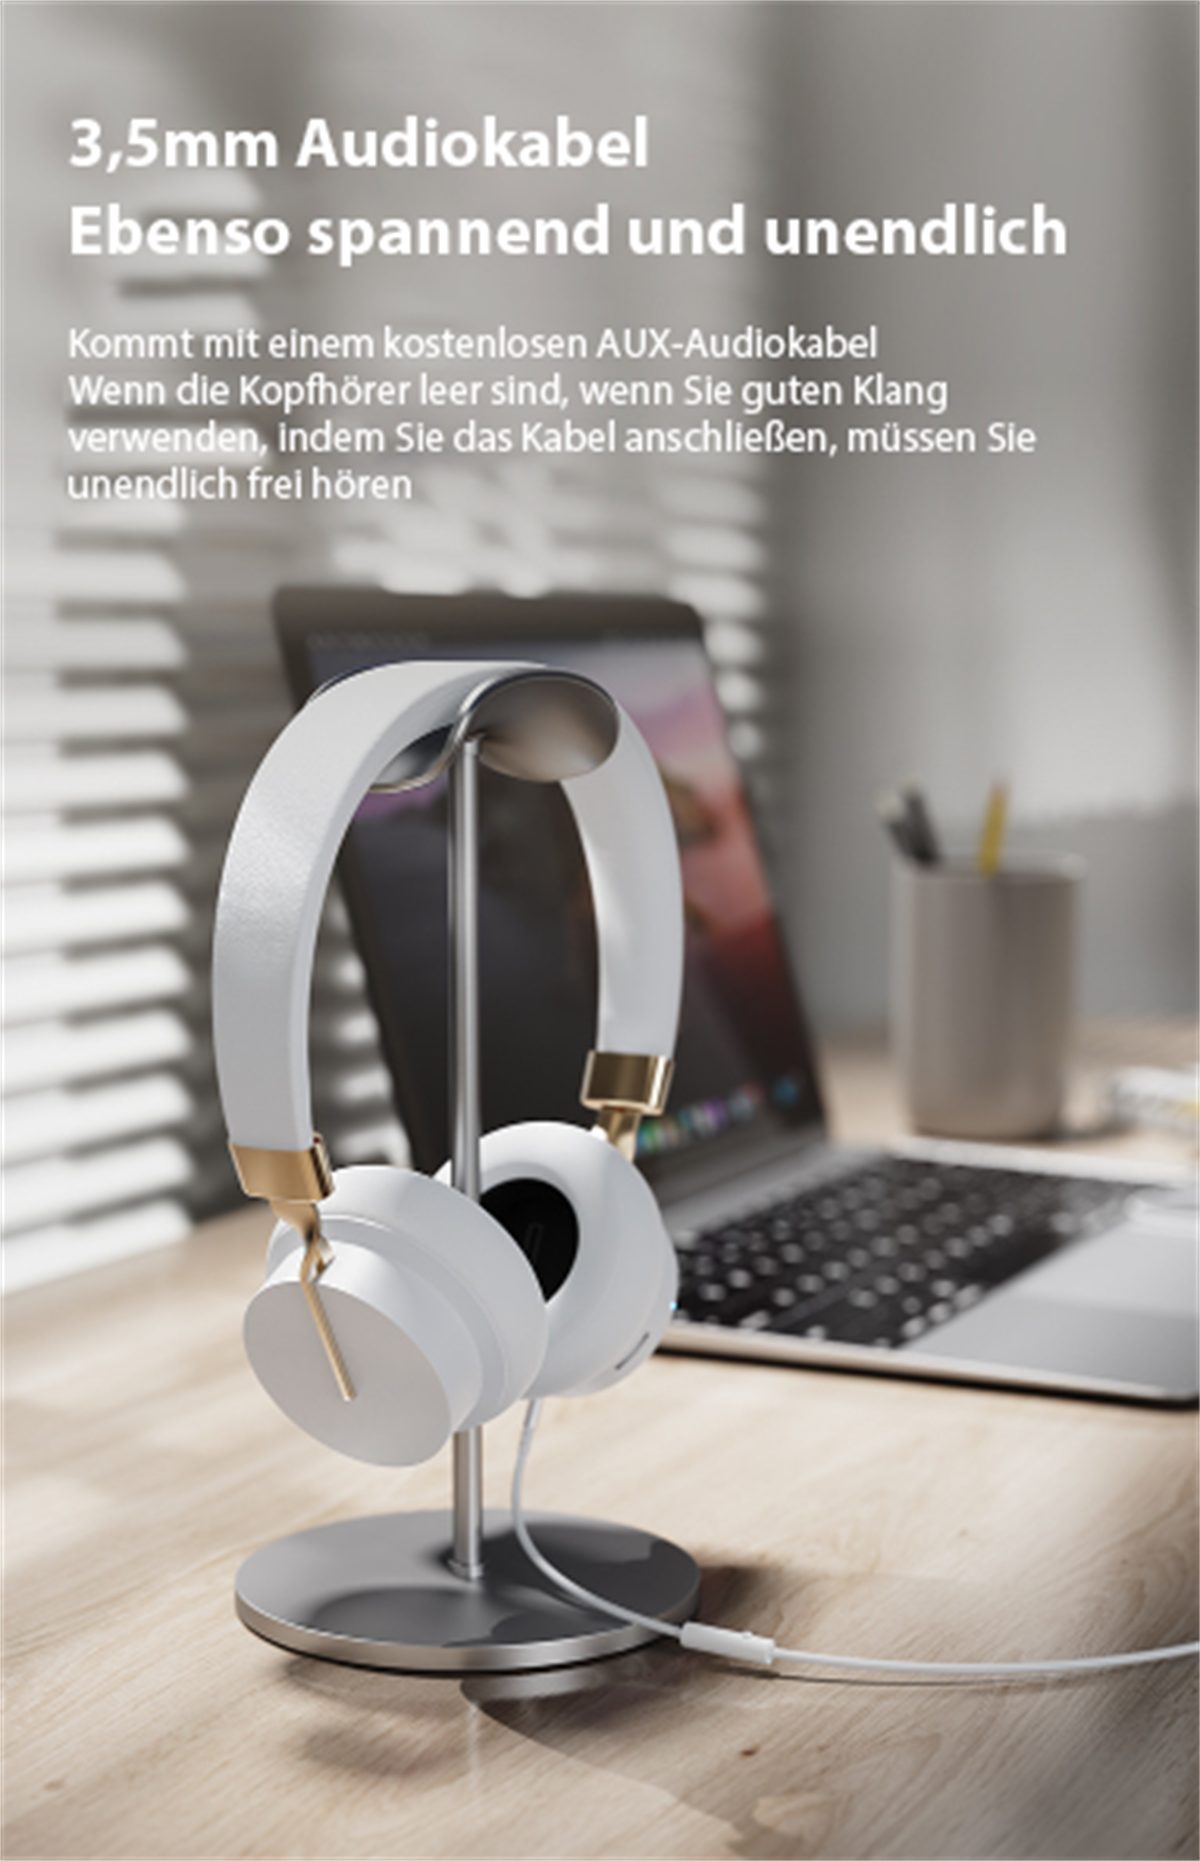 lange Bluetooth-Headset, selected carefully 50 Akkulaufzeit Over-Ear-Kopfhörer Headset, Kabelloses Weiß Stunden